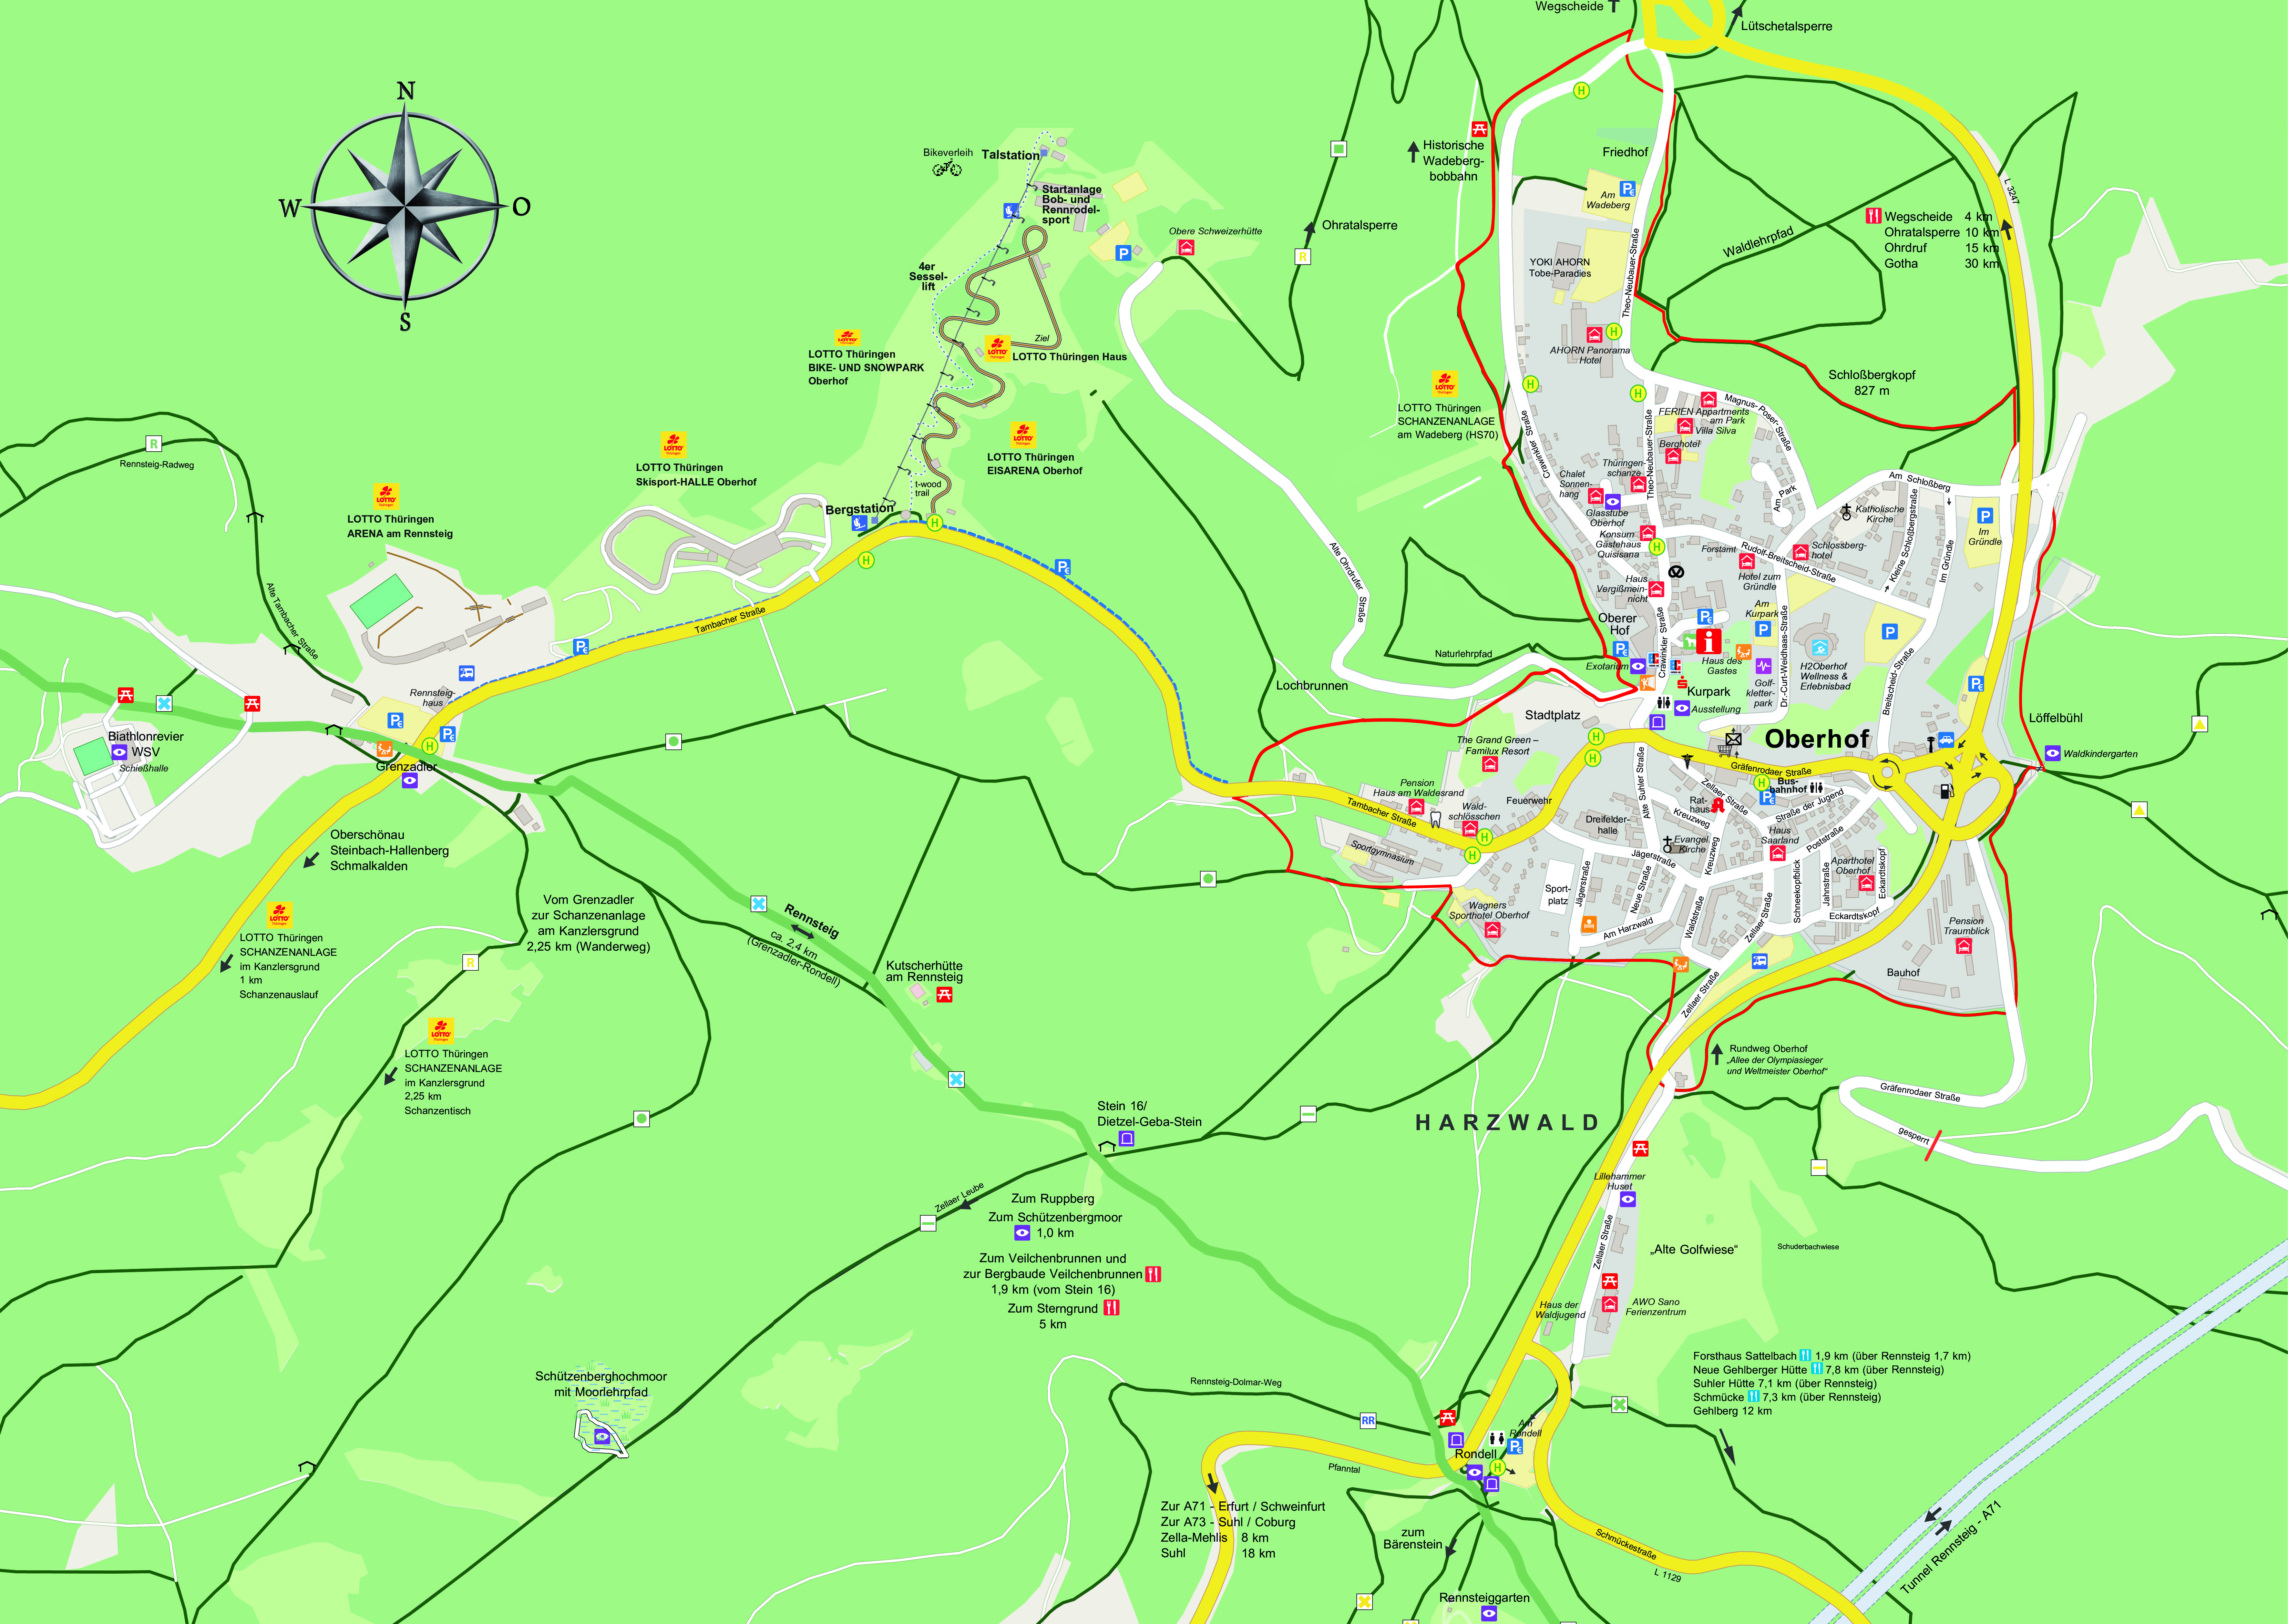 Oberhofer Stadtplan, Anischtskarte